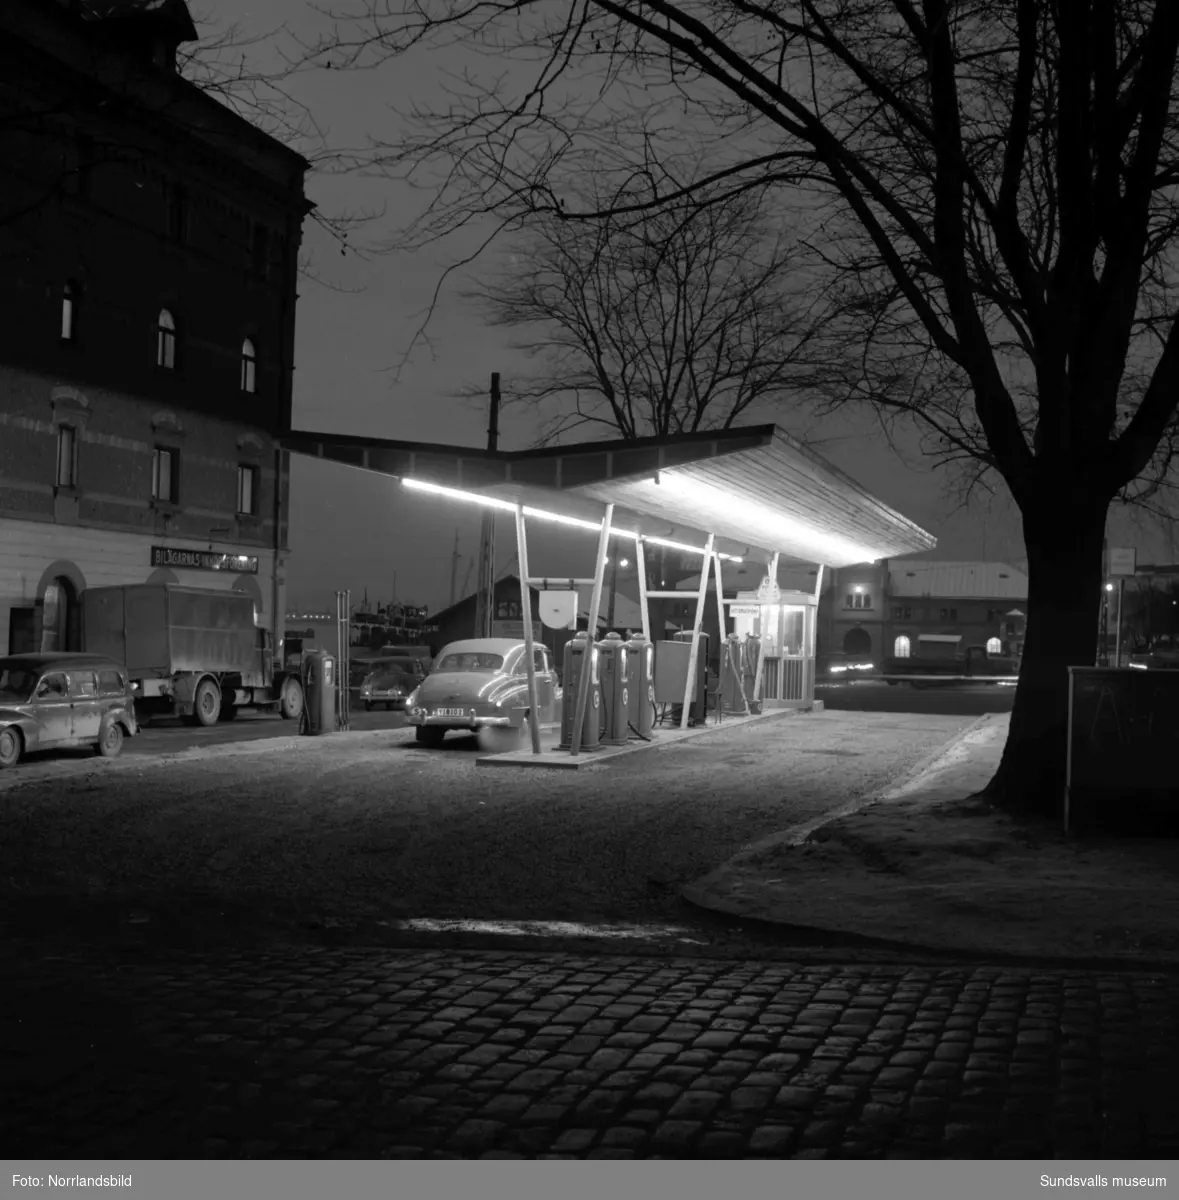 IC-stationen vid Packhusgatan i kvällsbelysning. (OK)